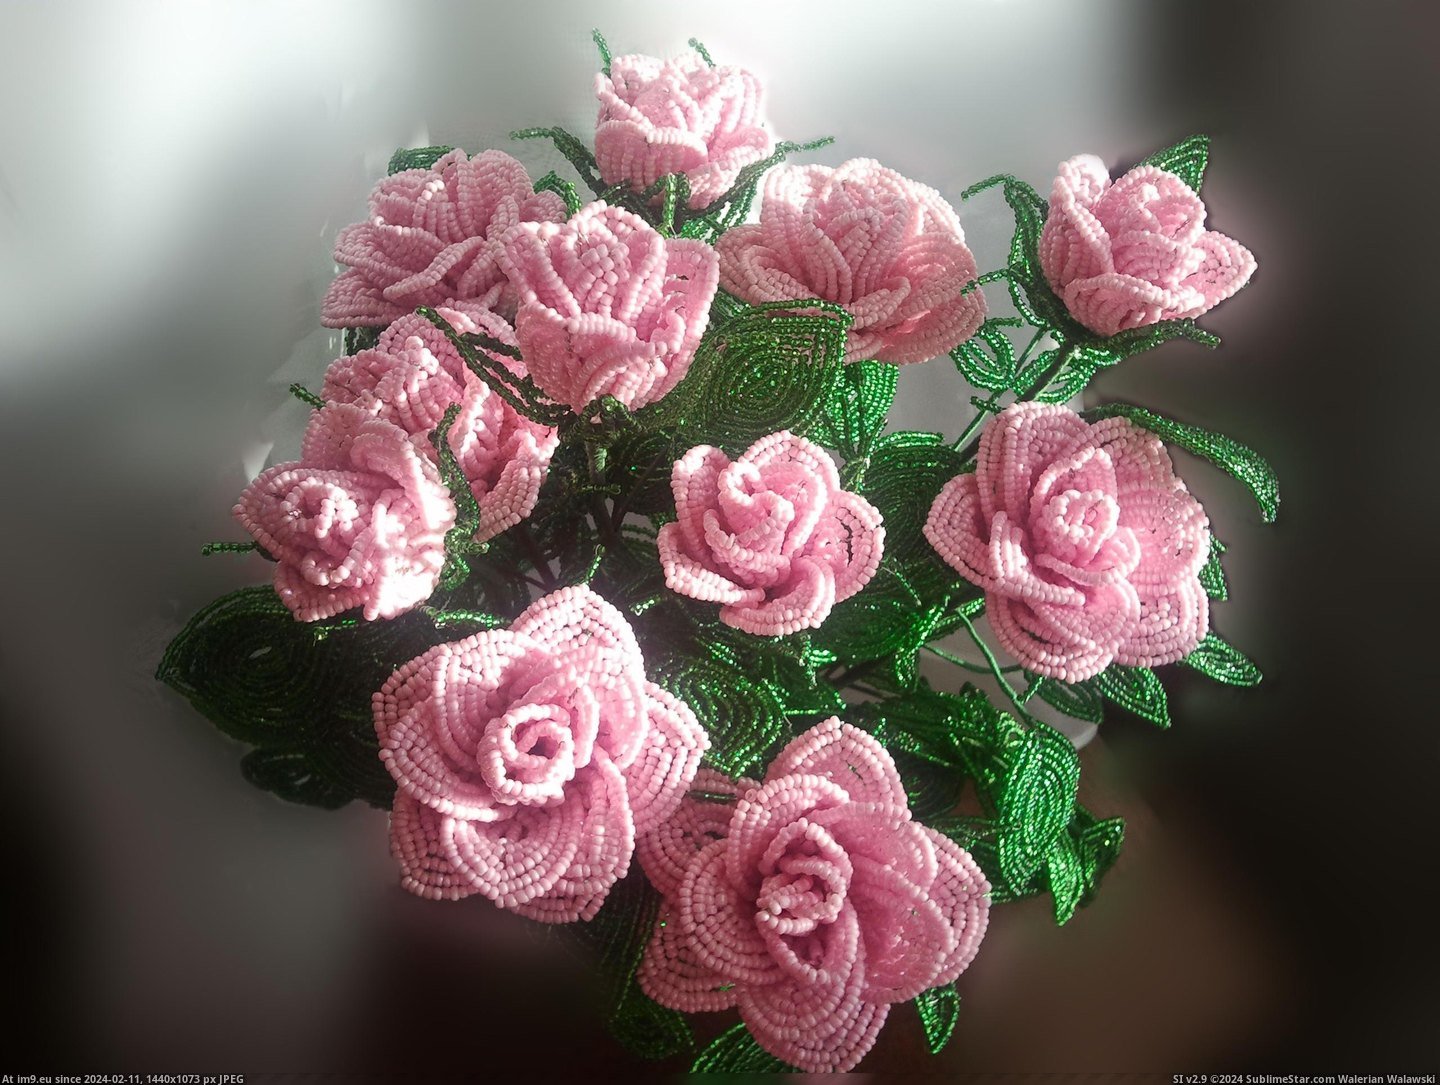 #Pink #Flowers #Bead #Roses #Craft Bead craft - flowers, pink roses Pic. (Obraz z album Random images))